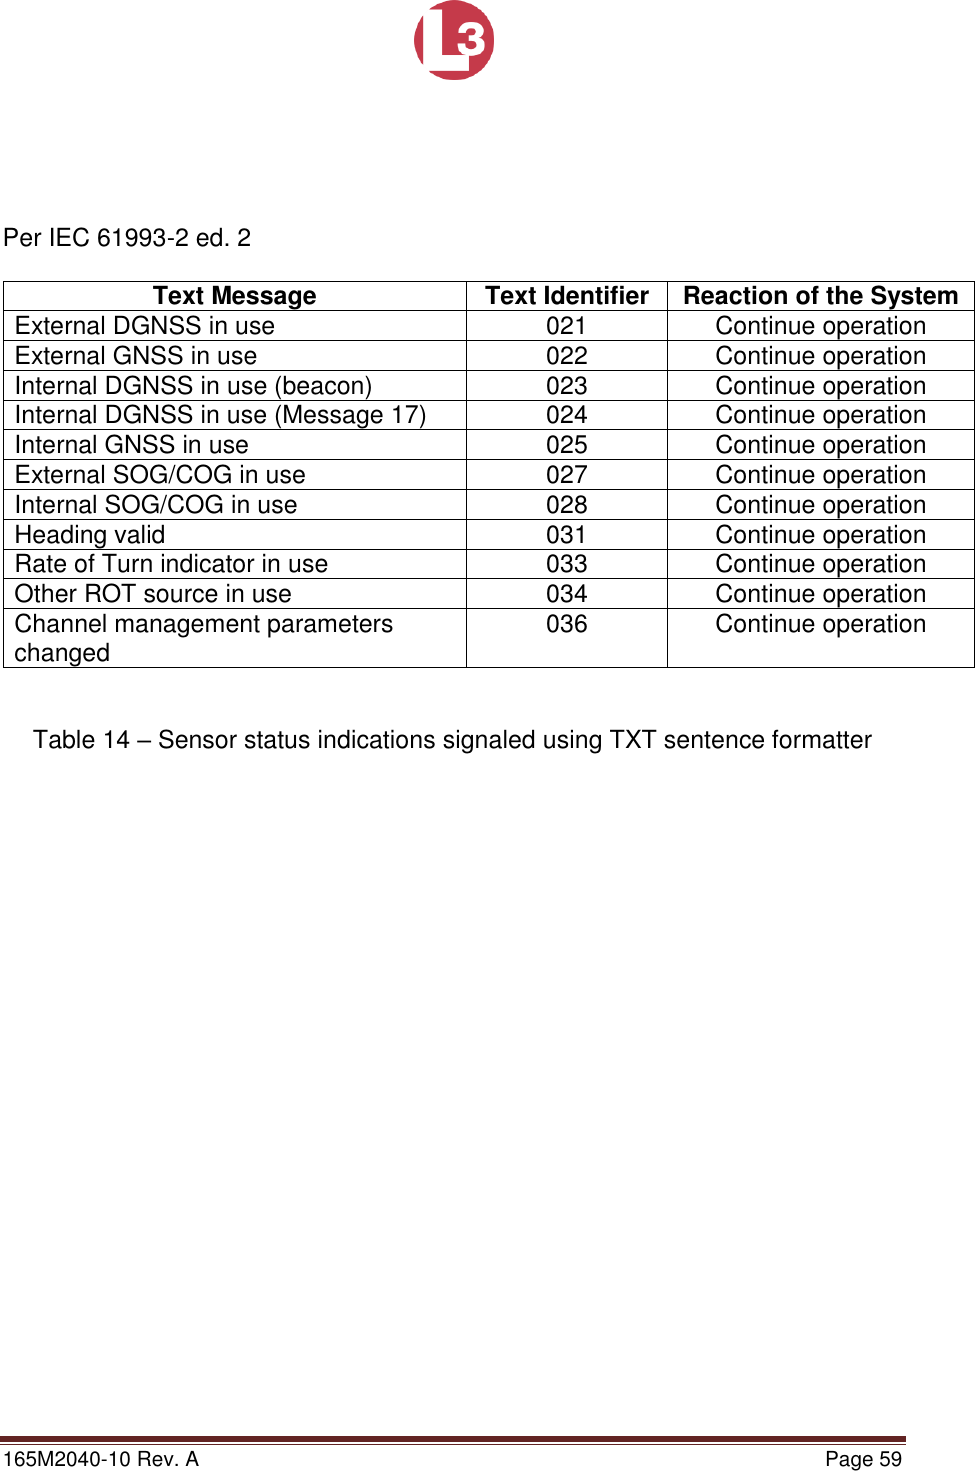 Page 59 of L3 Technologies AISA6 Shipboard Mobile AIS User Manual Memory Verification Procedure